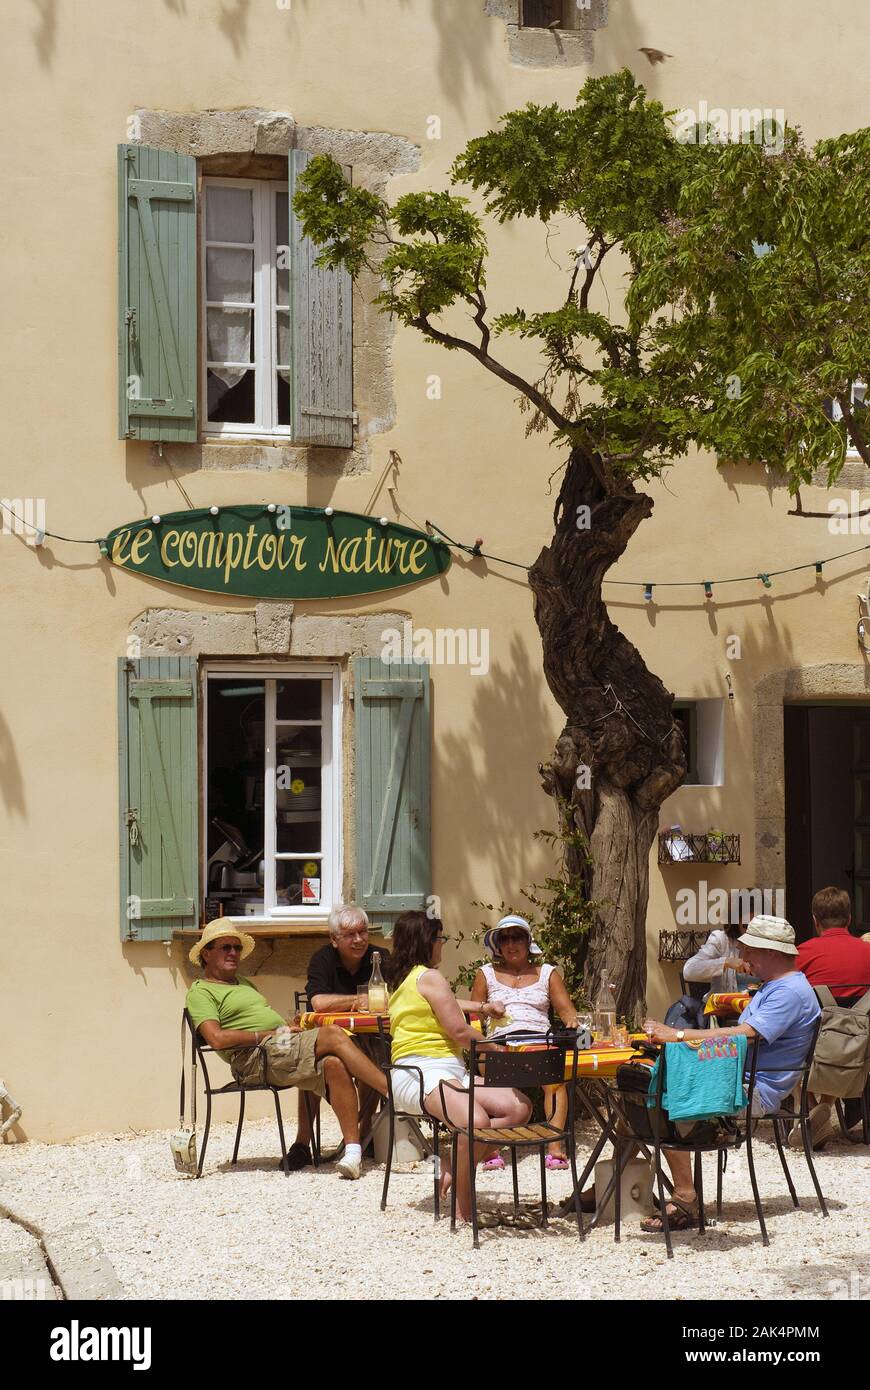 Restaurant-Bar "Le Comptoir Nature" in Le Somail, Südfrankreich | usage  worldwide Stock Photo - Alamy